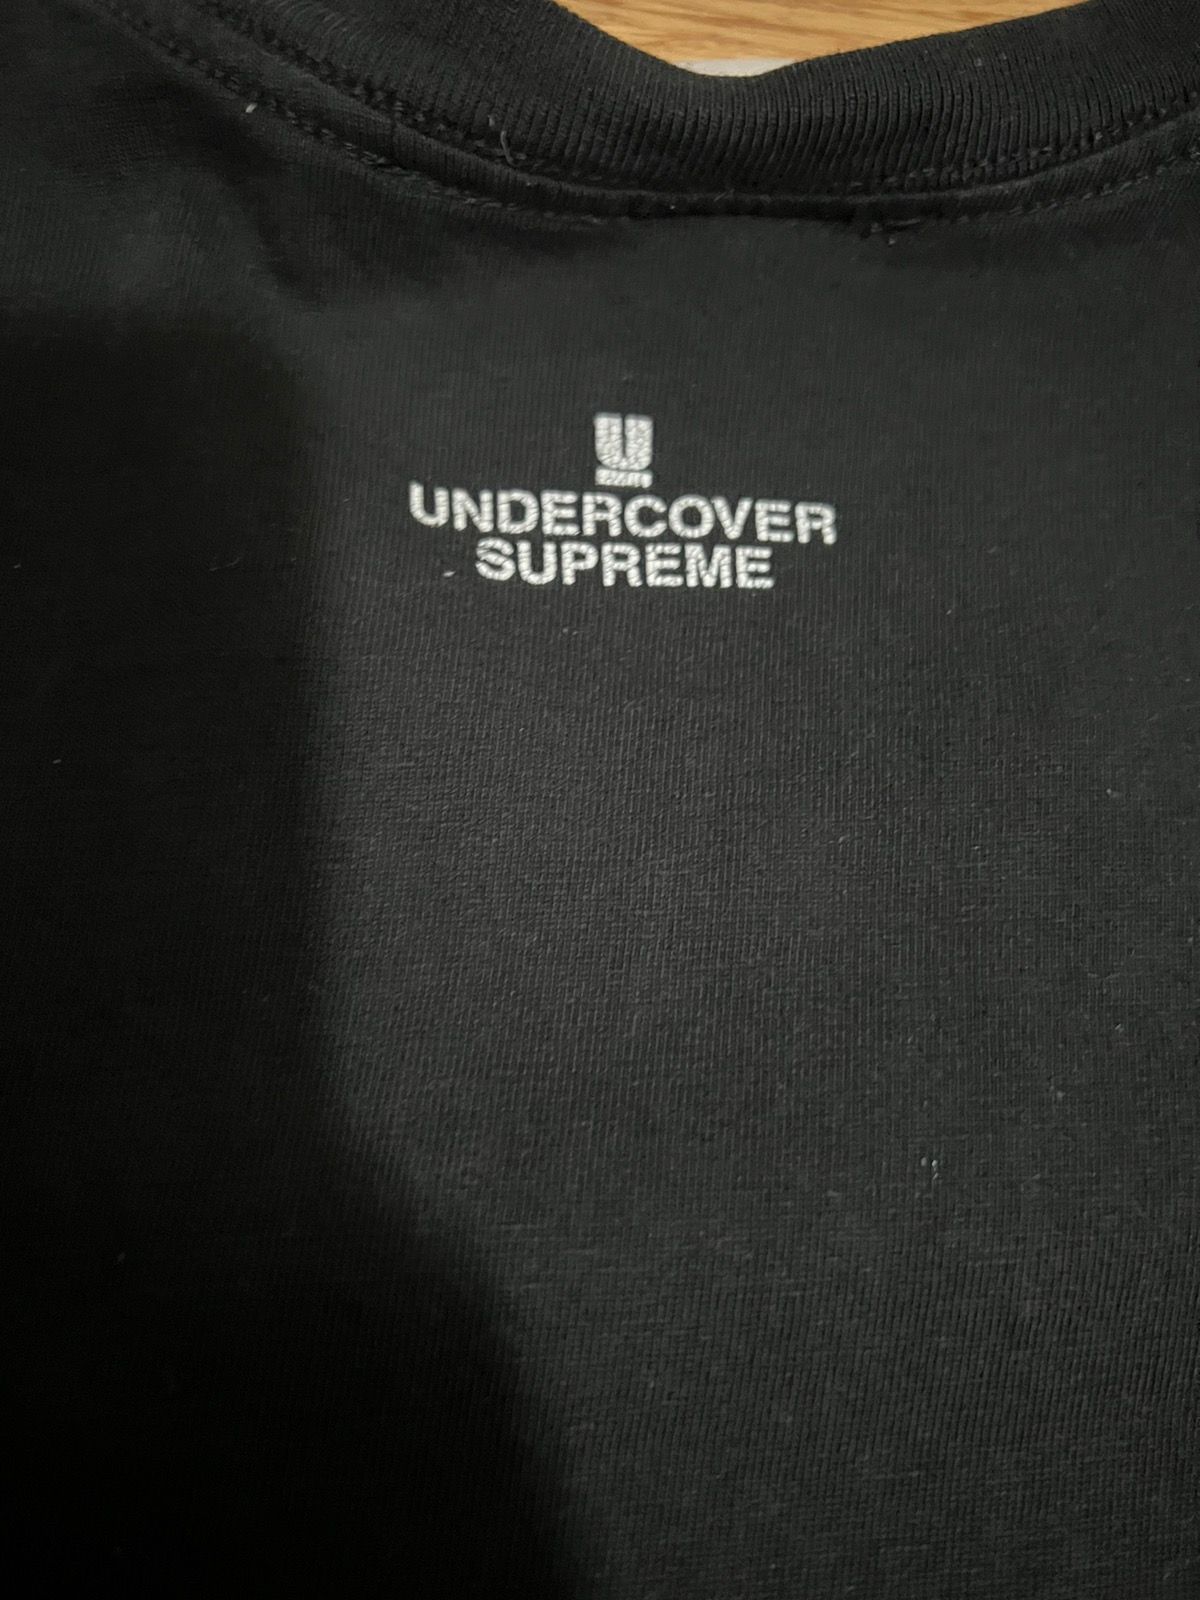 Supreme Public Enemy Black Undercover Supreme Shirt Size US M / EU 48-50 / 2 - 3 Thumbnail